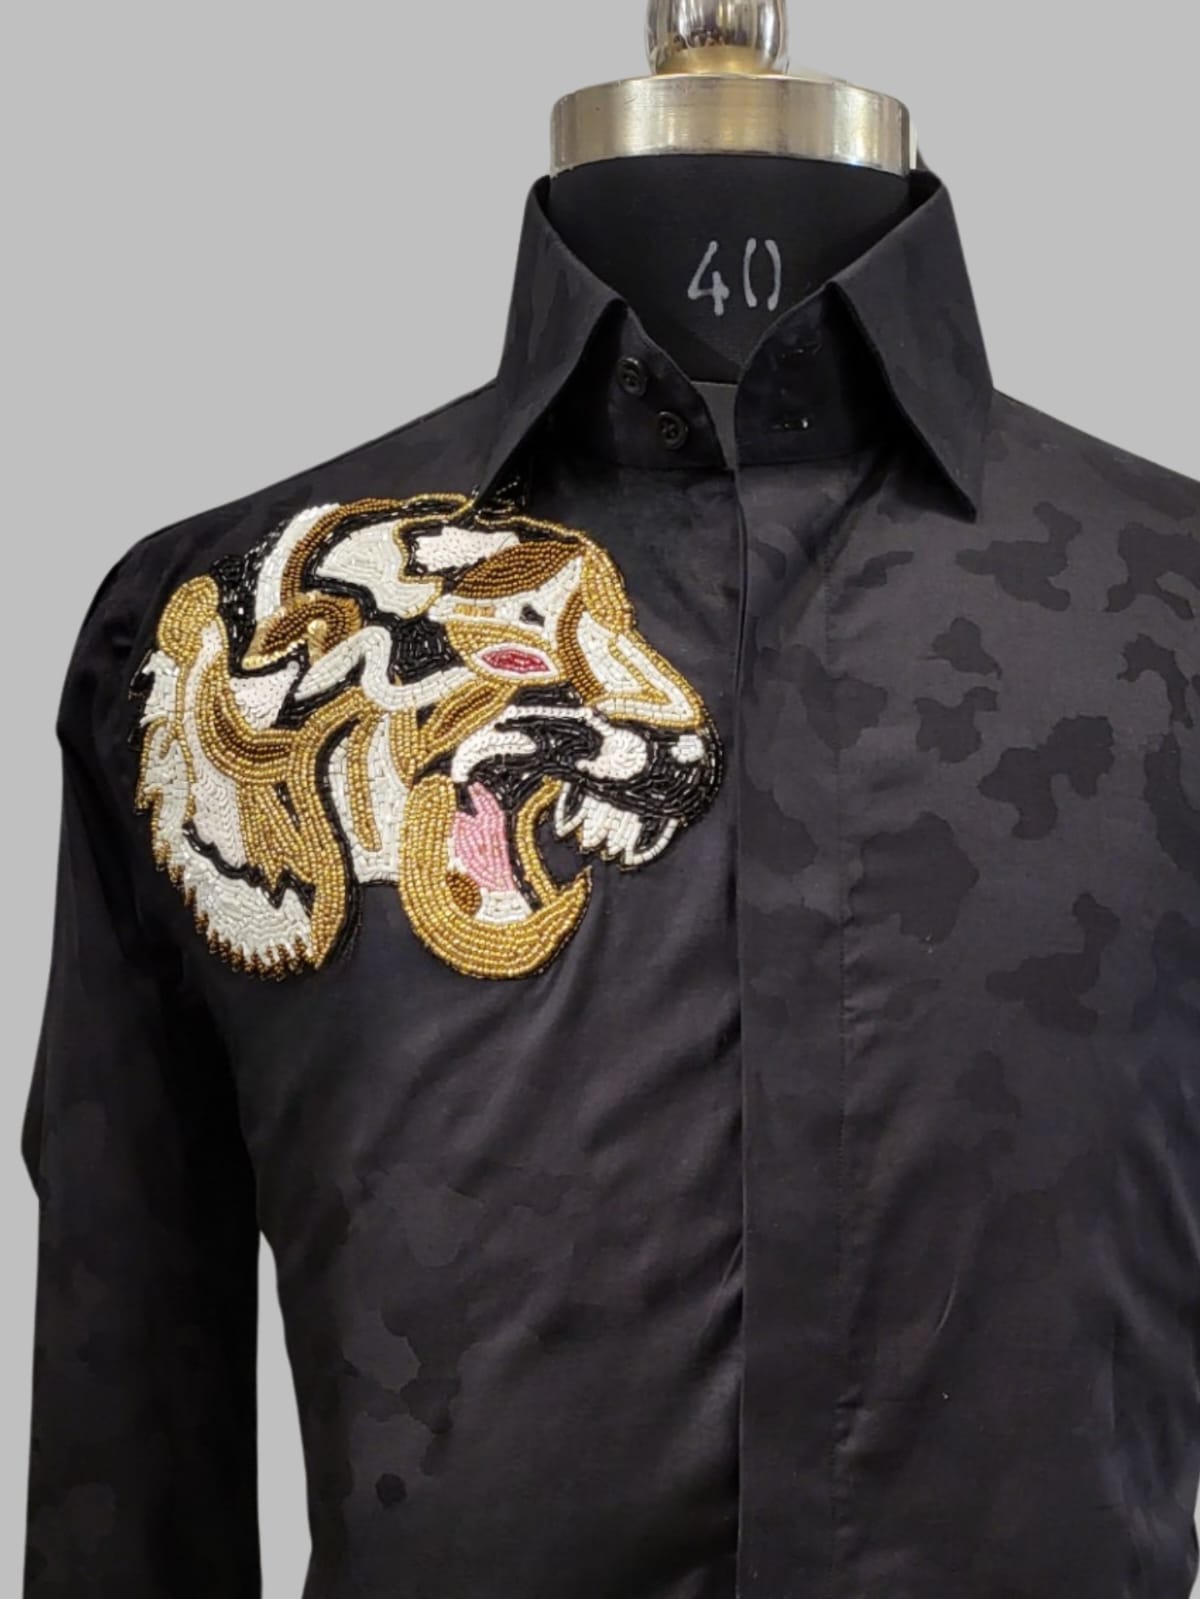 Black Tiger JUngle Shirt